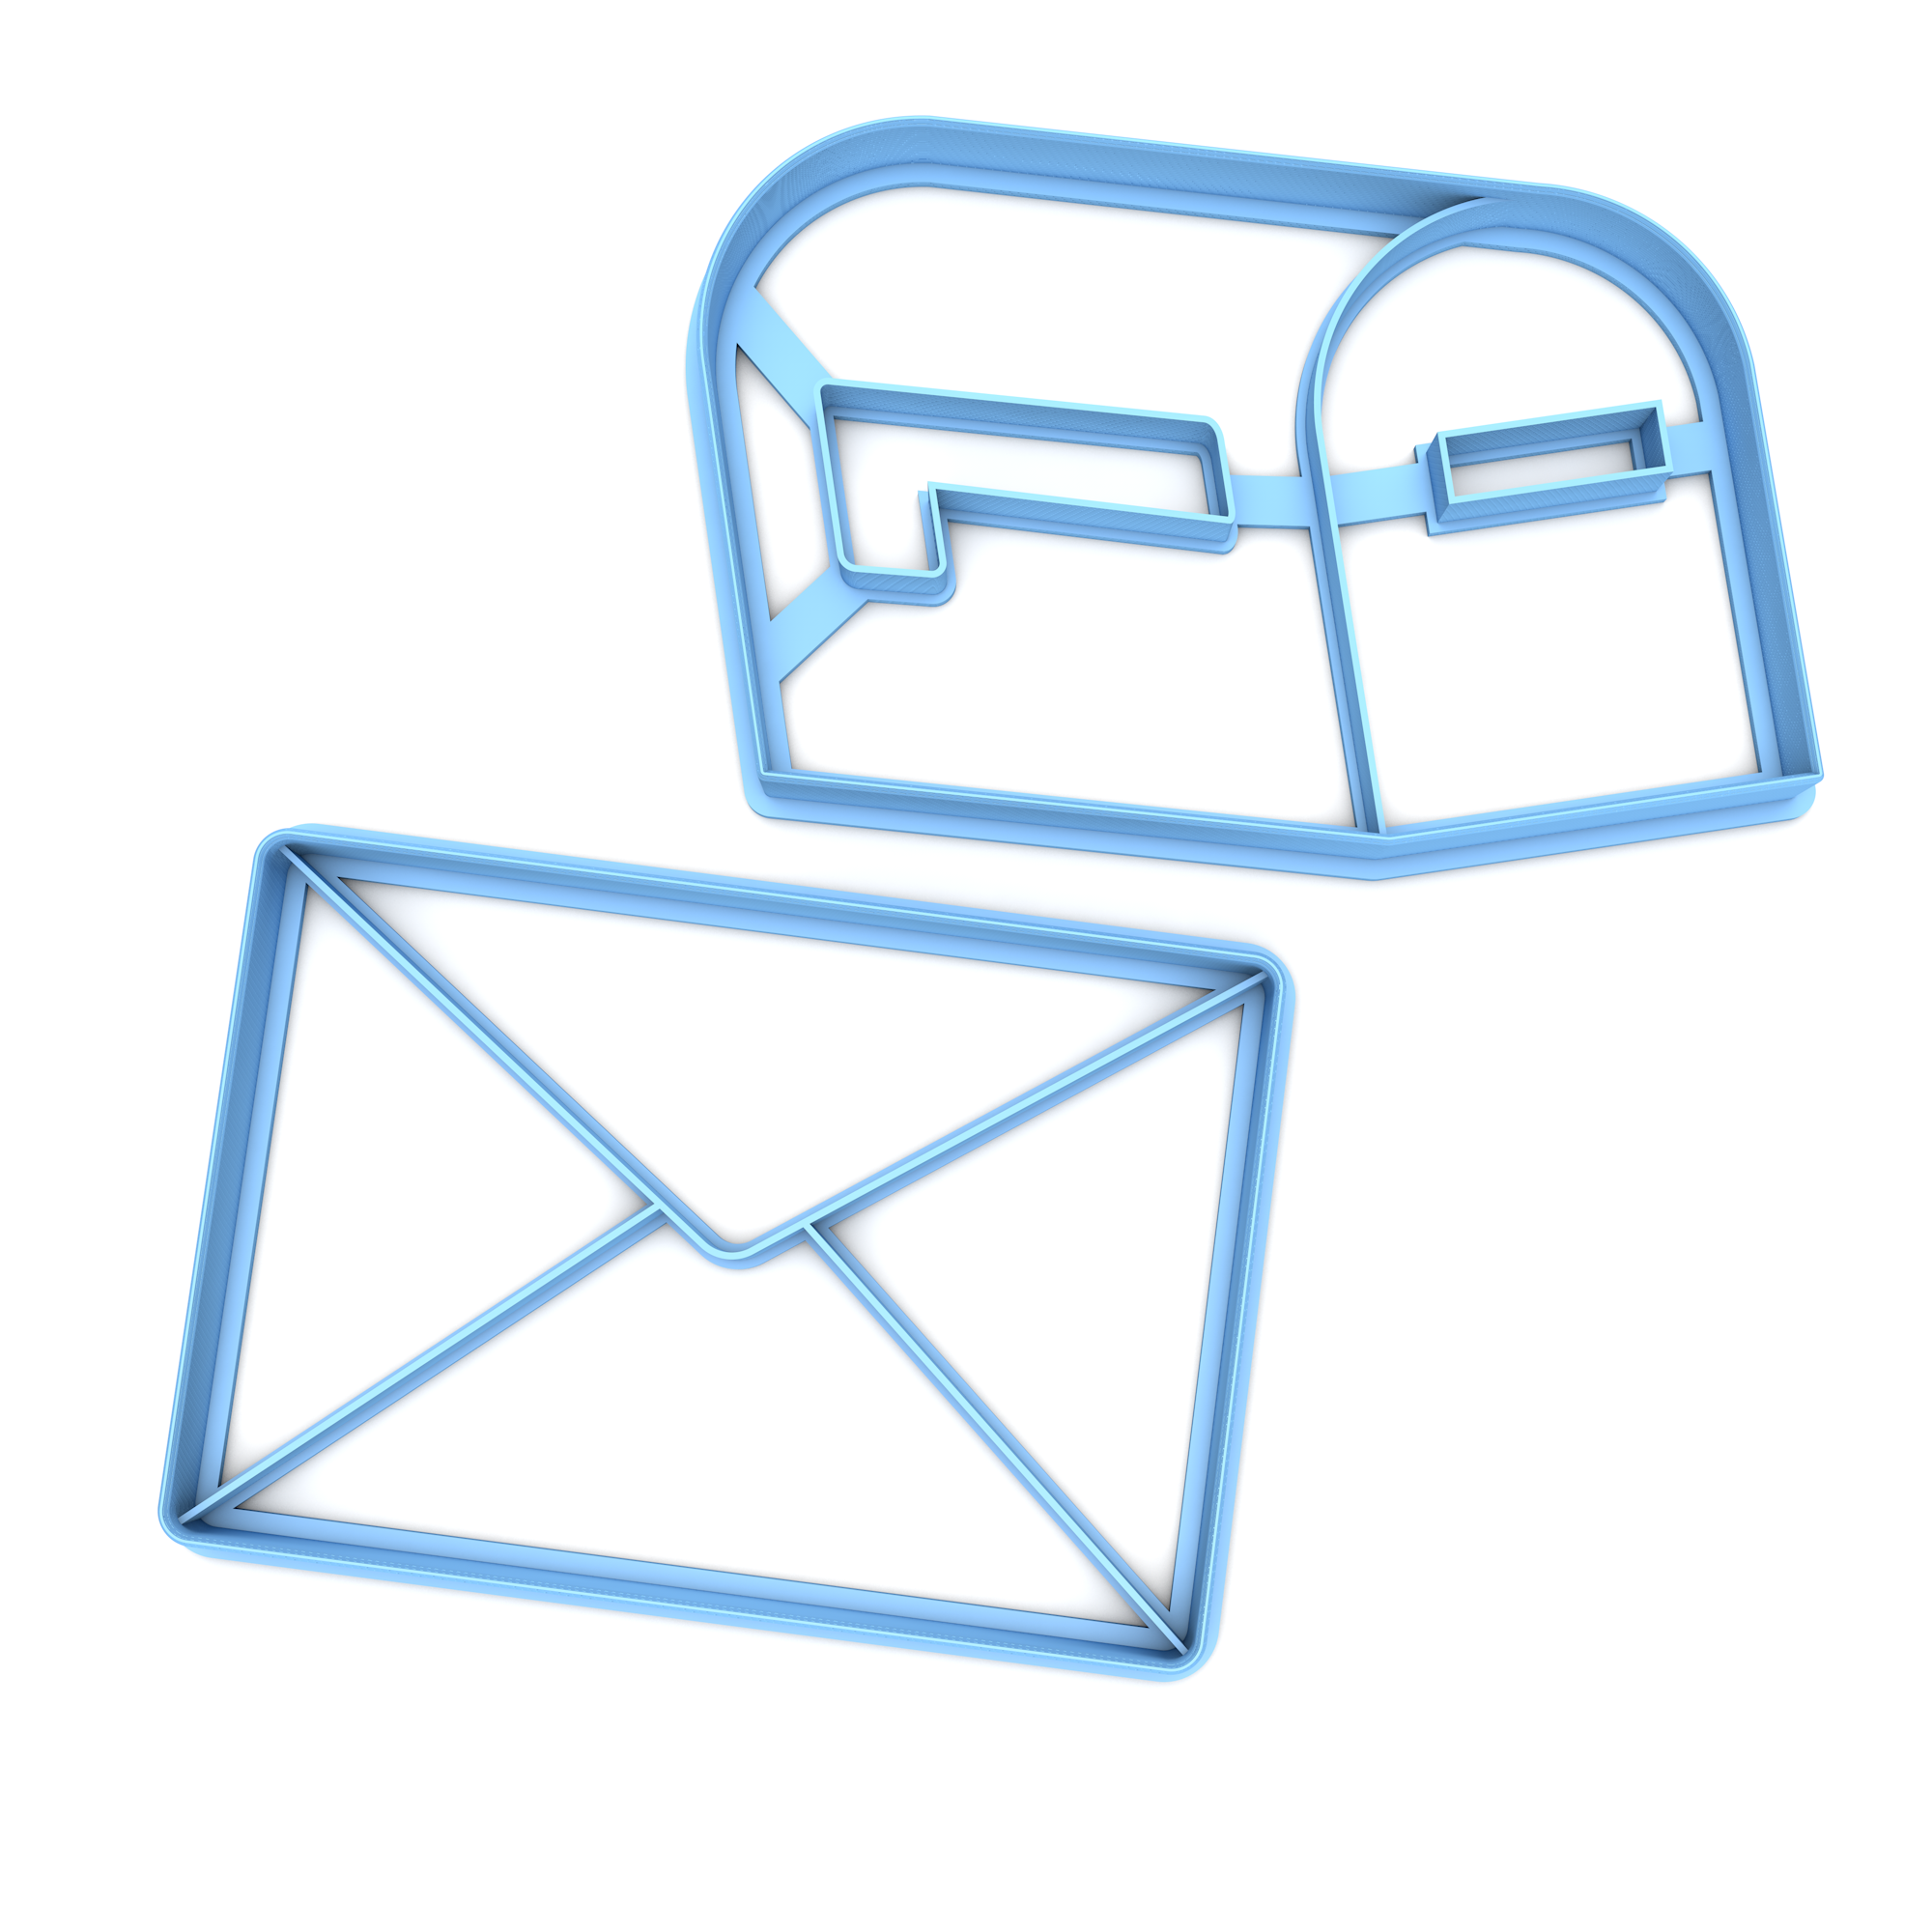 Set of 2 Envelope and Mailbox v1 Cookie Cutters/Dishwasher Safe